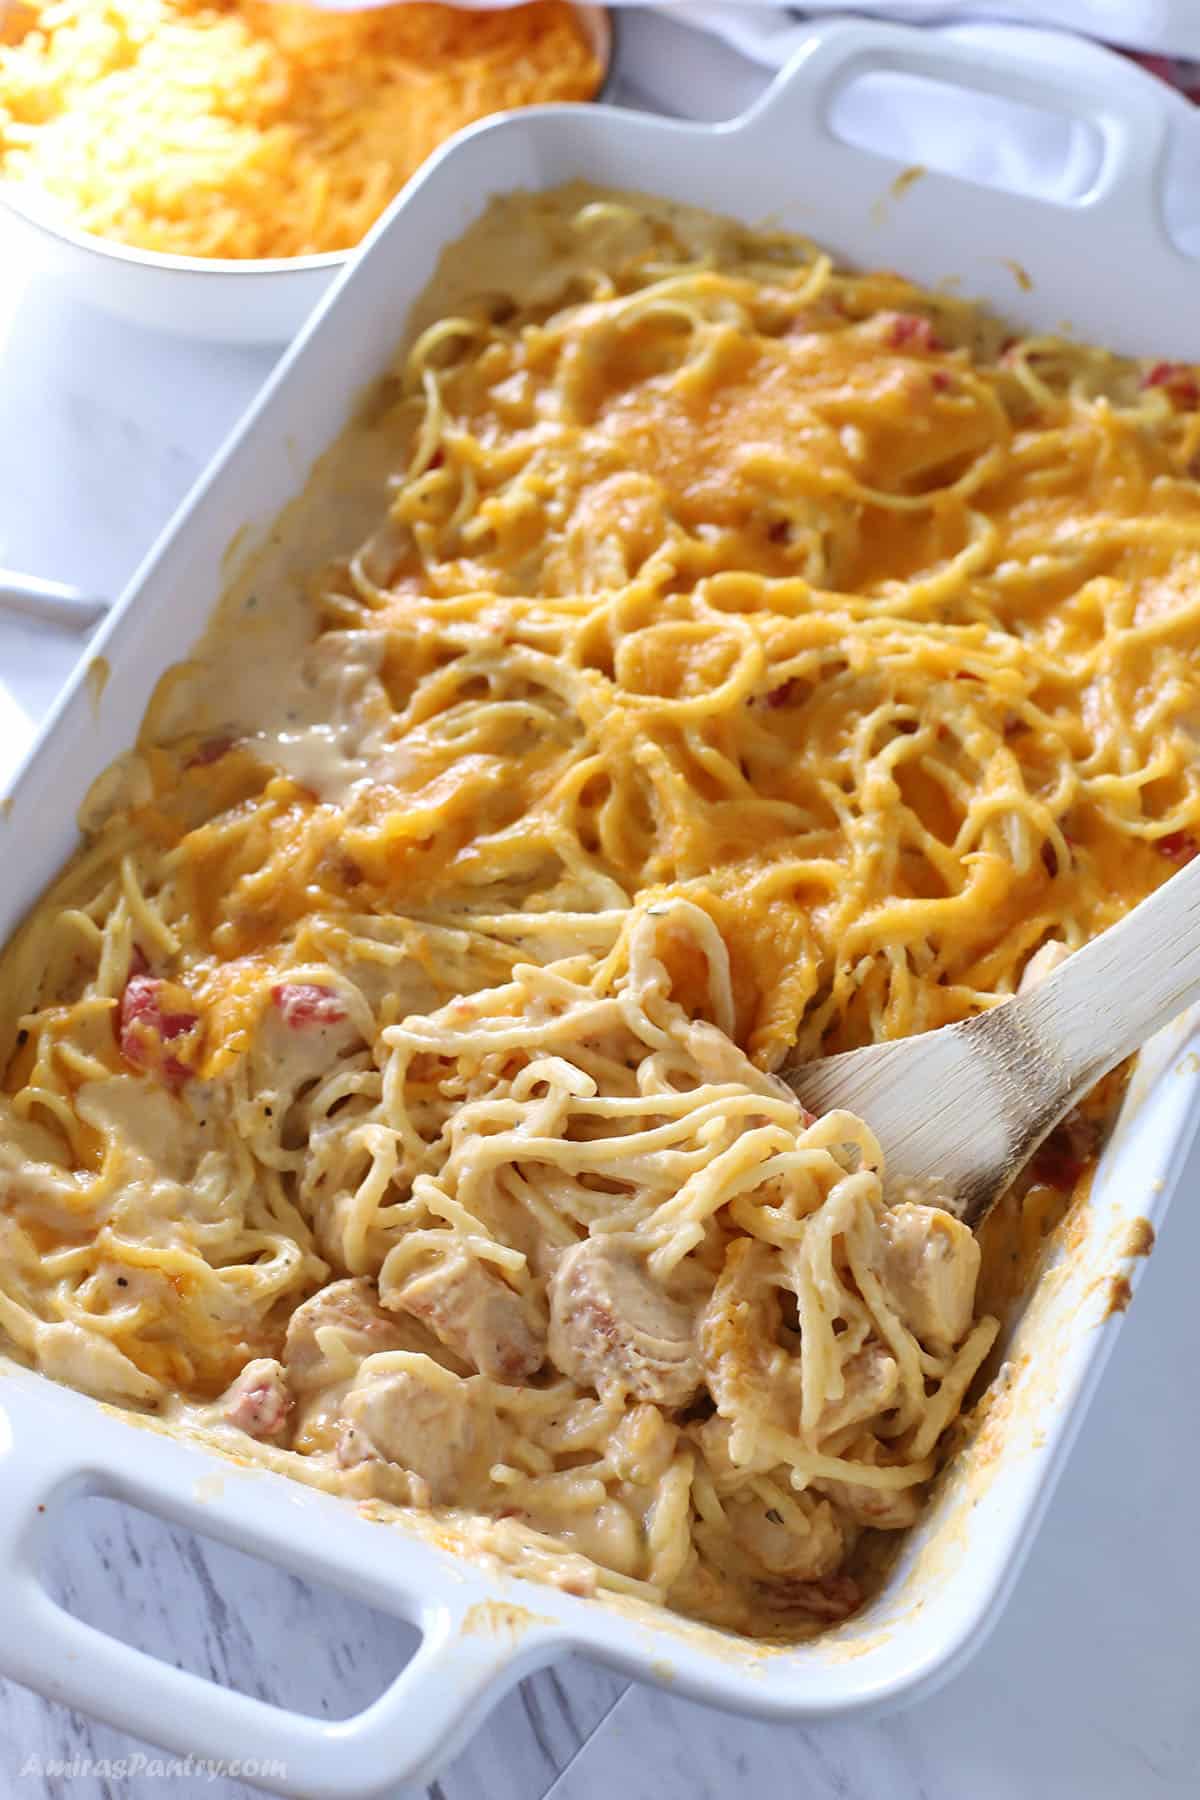 Wooden spoon in a casserole of chicken spaghetti.